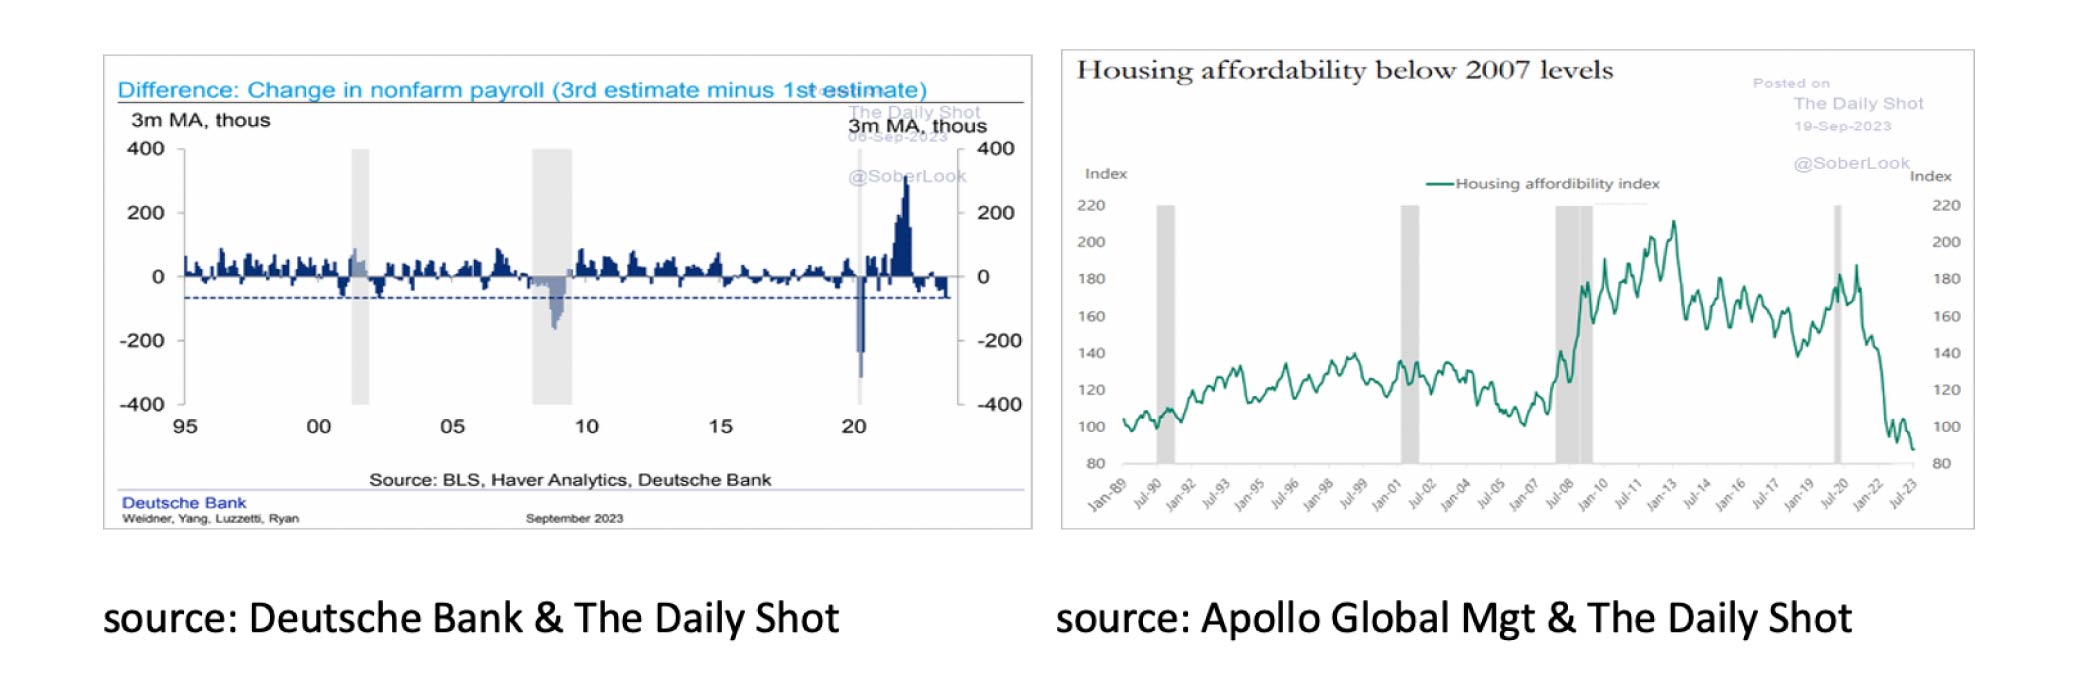 Housing affordability below 2007 levels